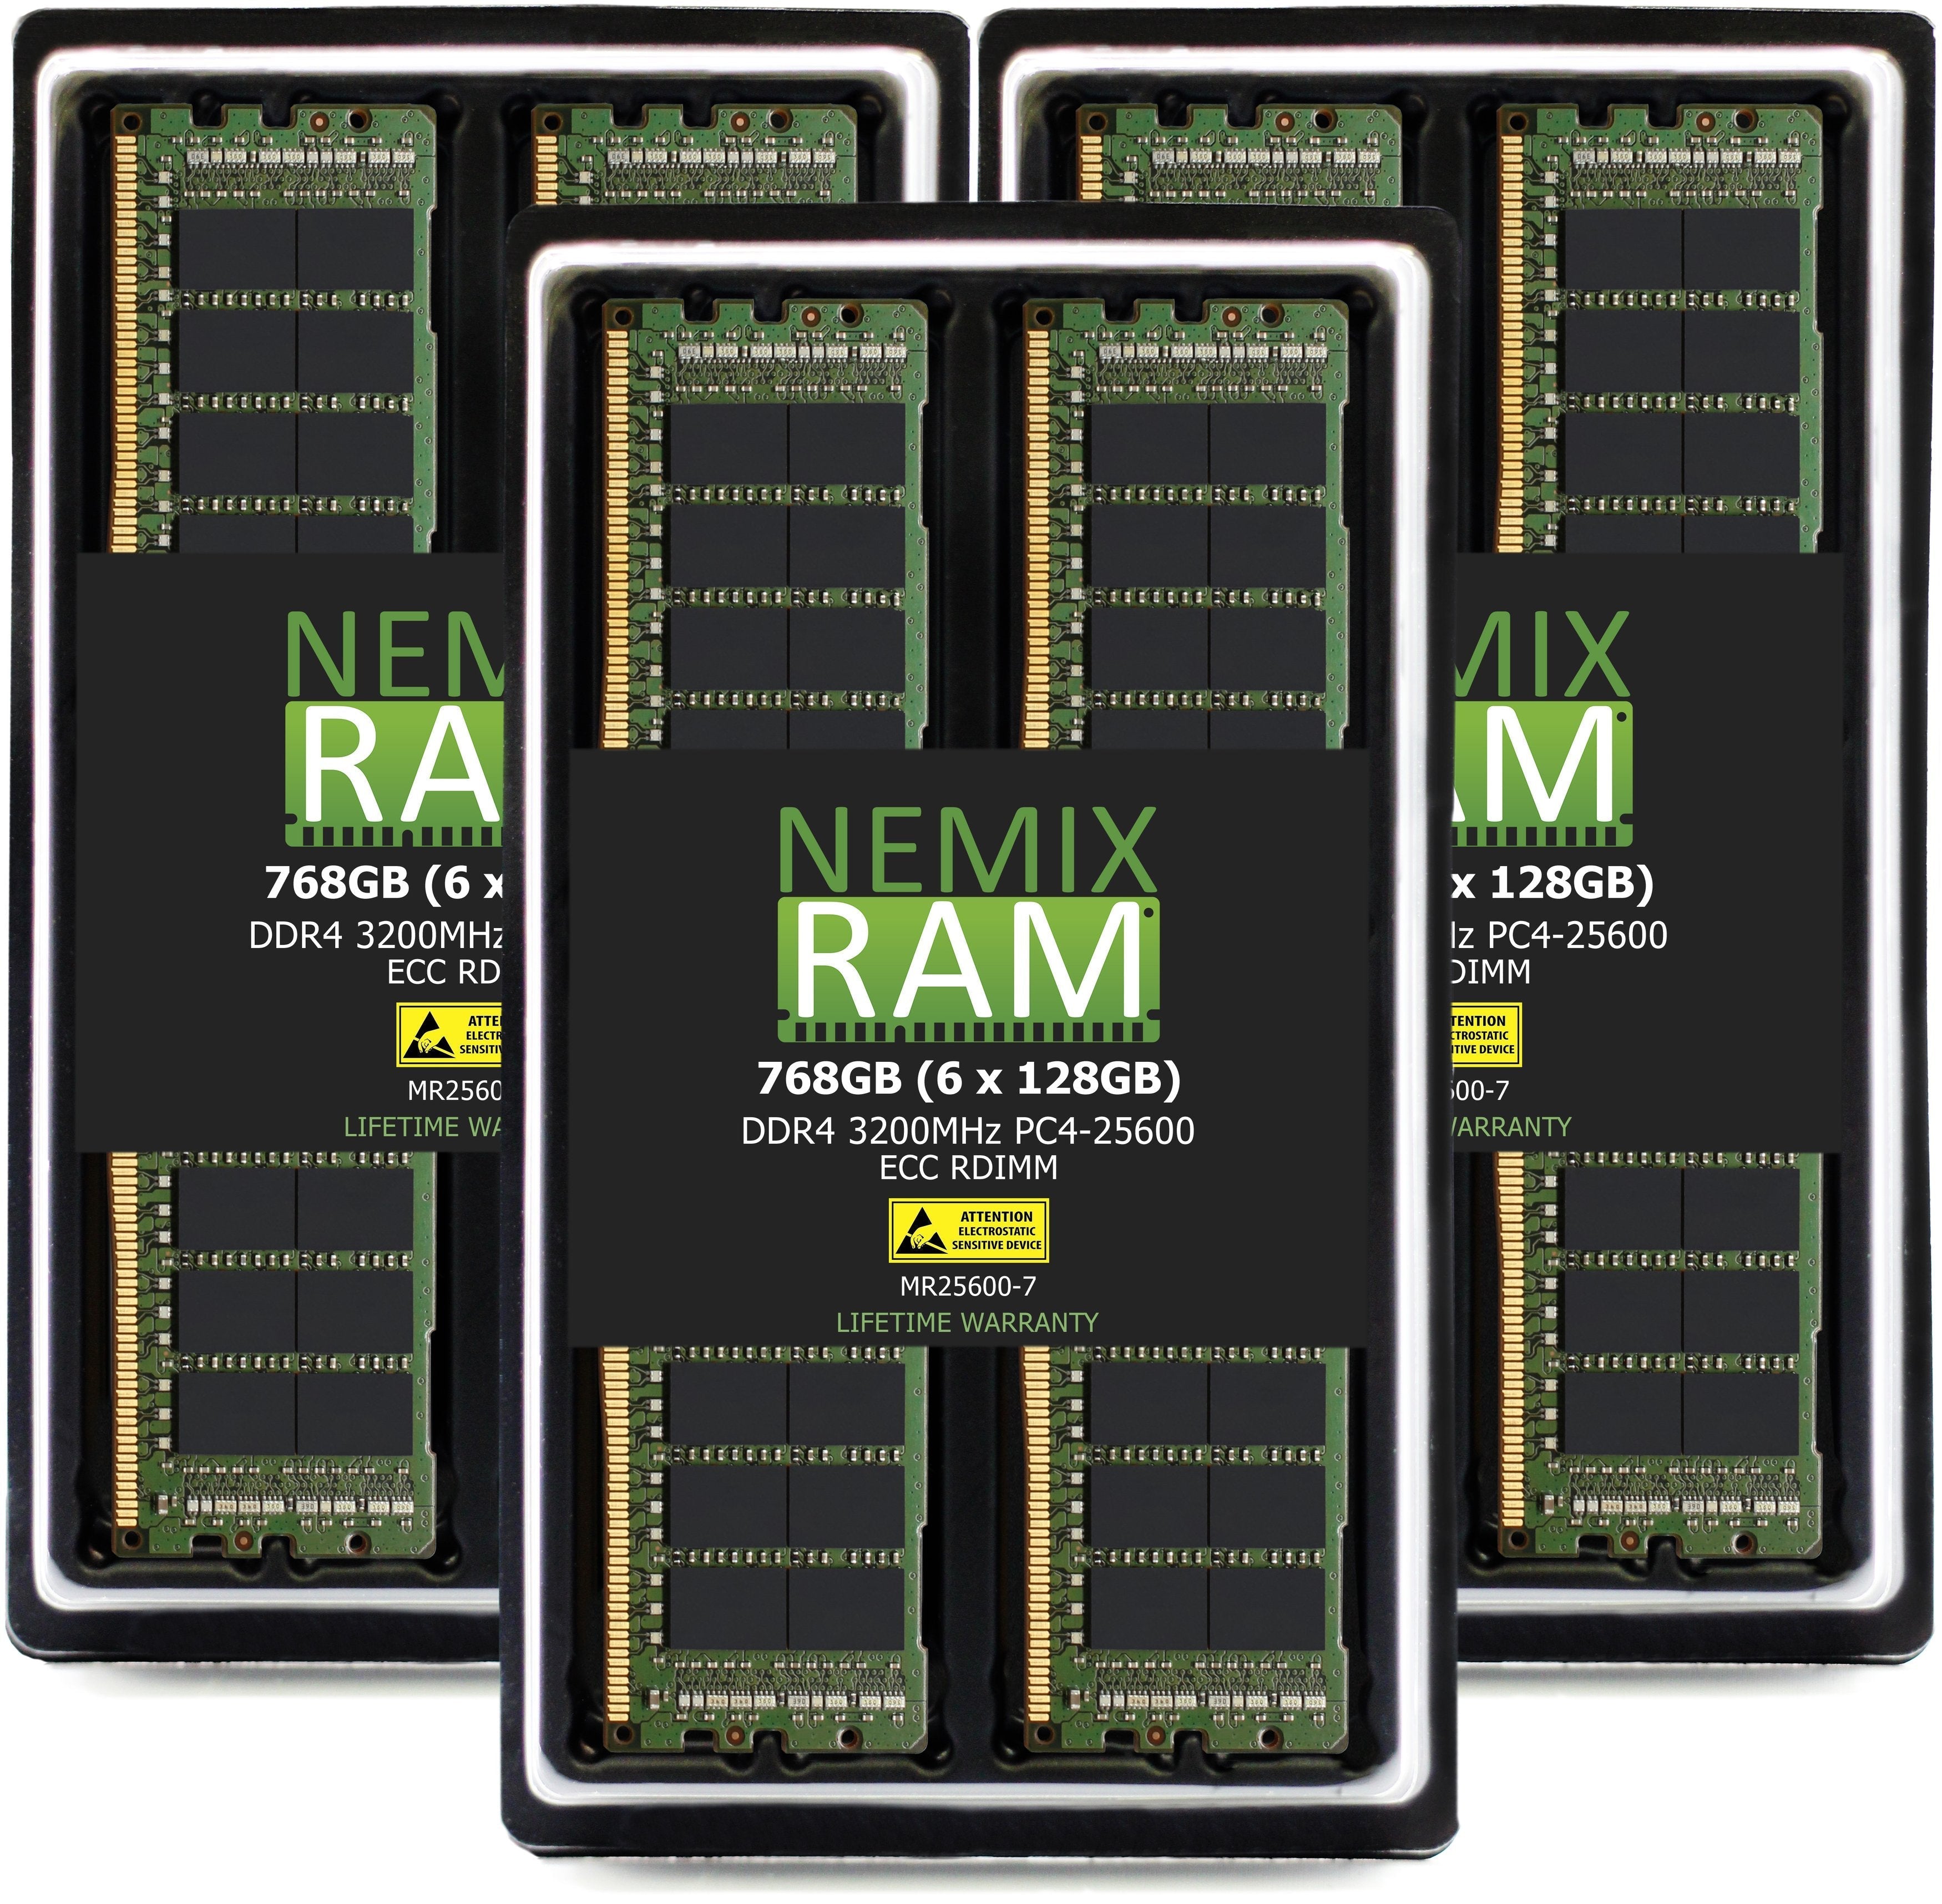 DDR4 3200MHZ PC4-25600 RDIMM 4RX4